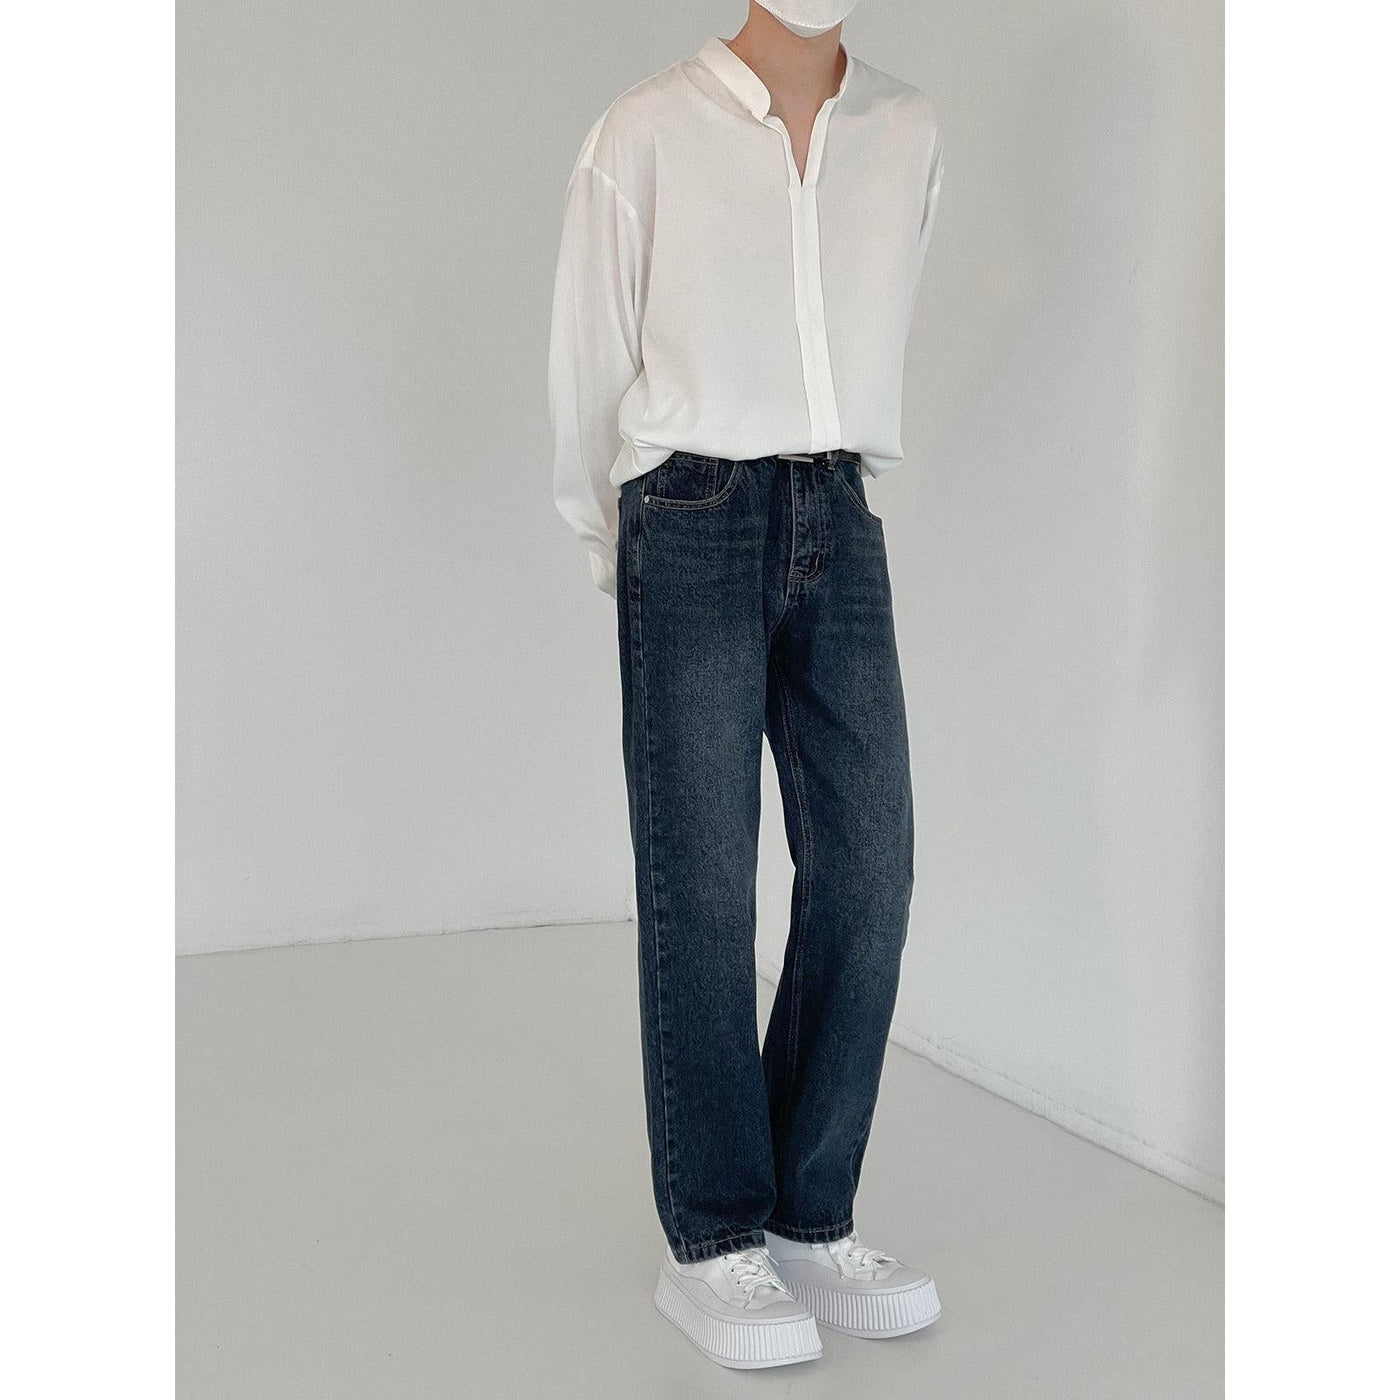 Zhou Essential Thin Collared Shirt-korean-fashion-Shirt-Zhou's Closet-OH Garments